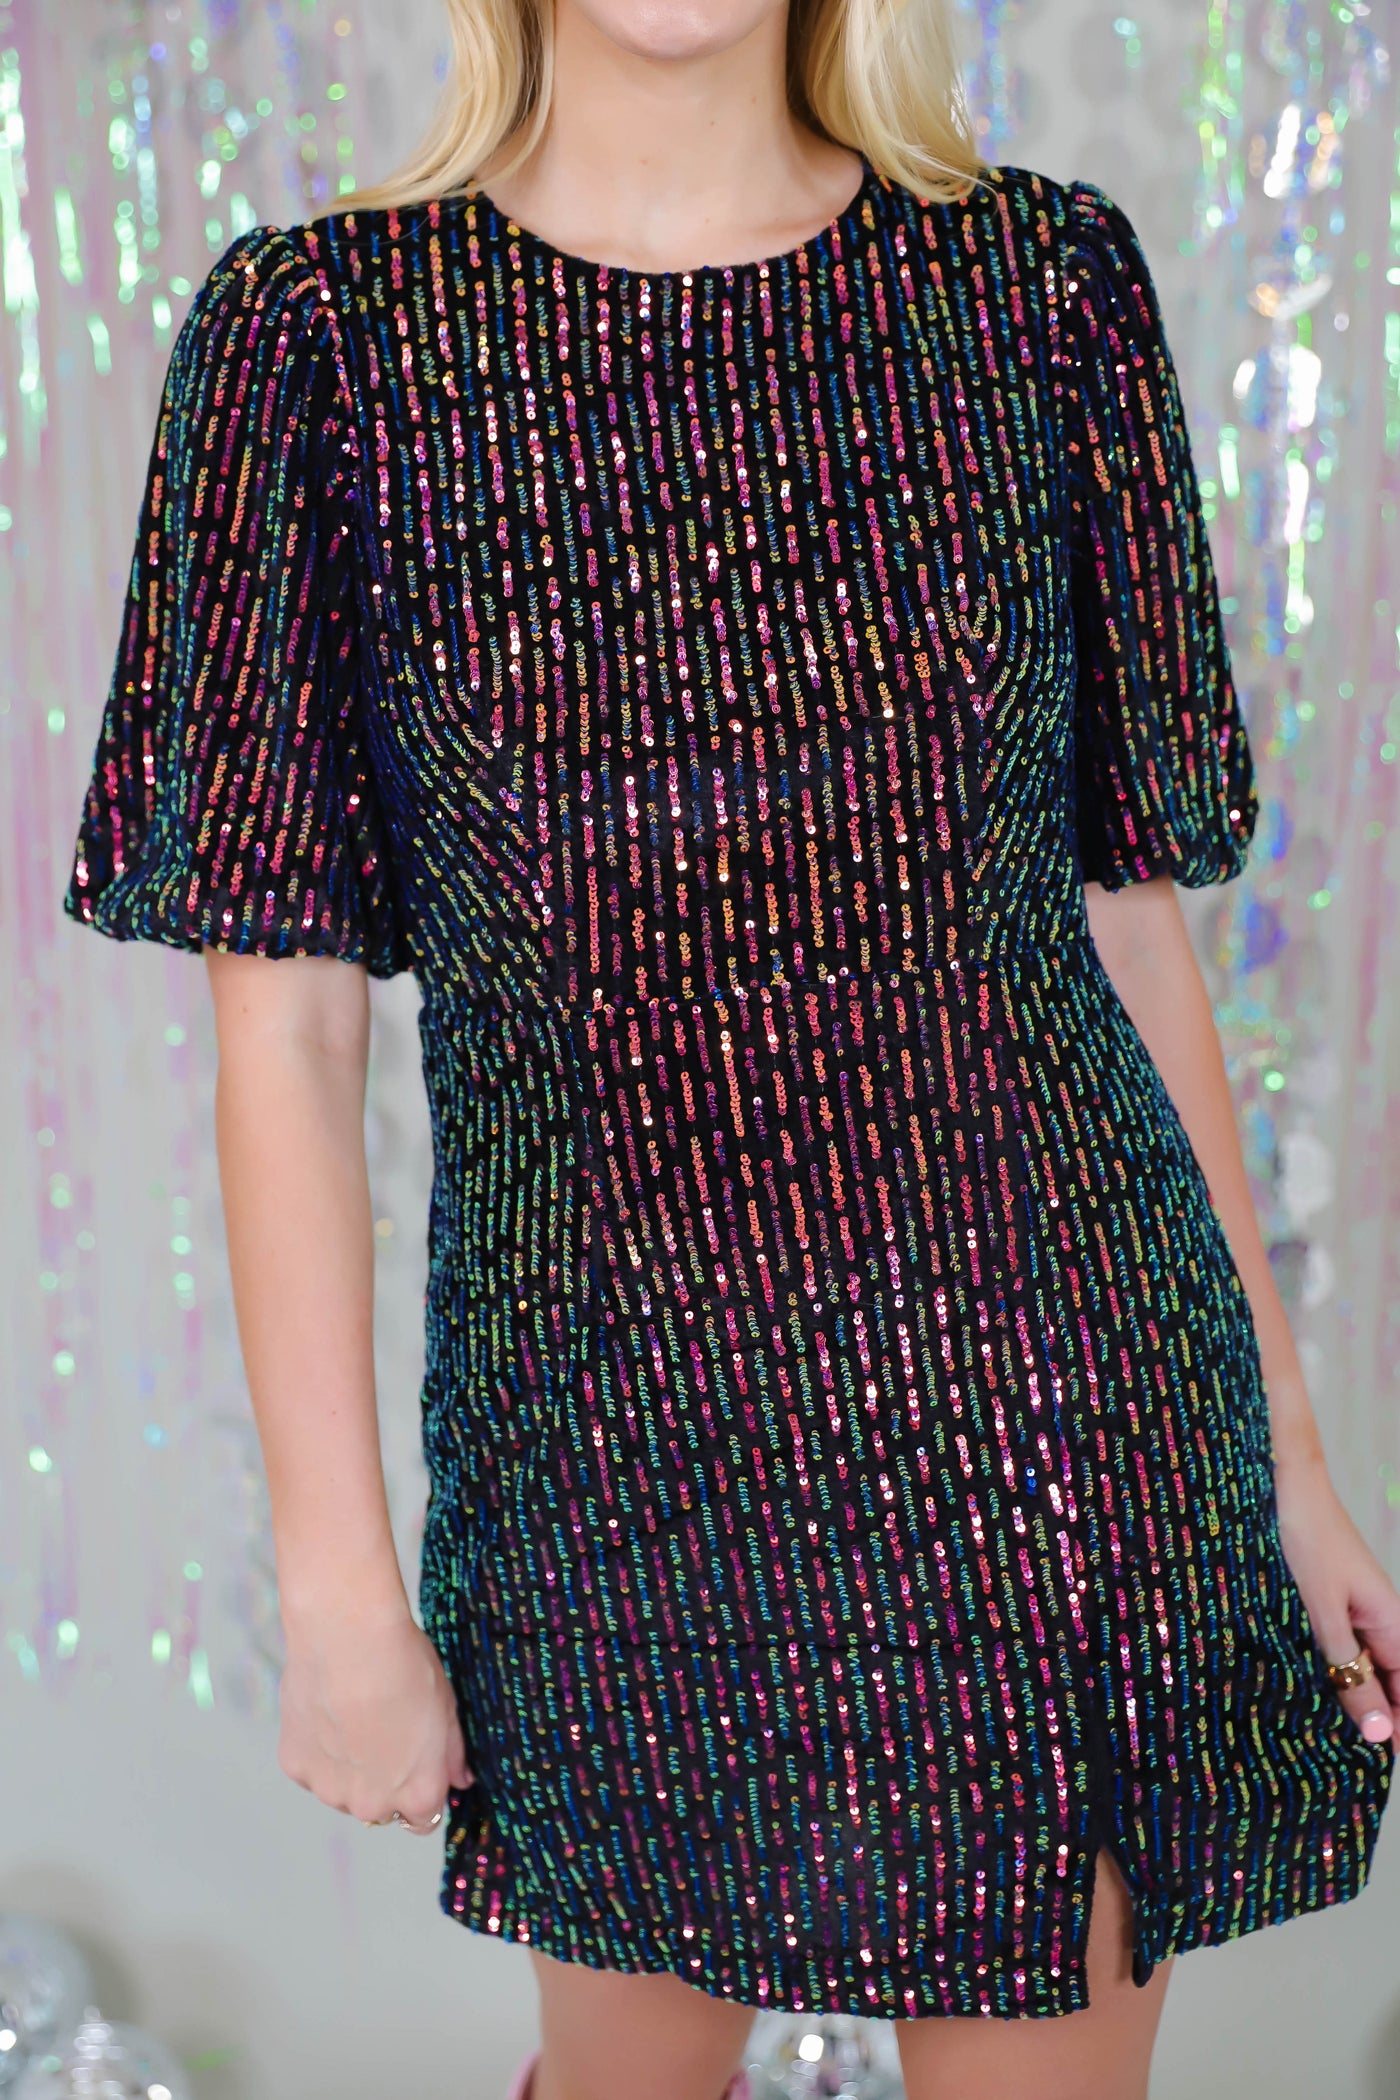 Sequin Party Dress- Open Back Sequin Dress- Multi Colored Sequin Dress- Entro Clothing Sequin Dress